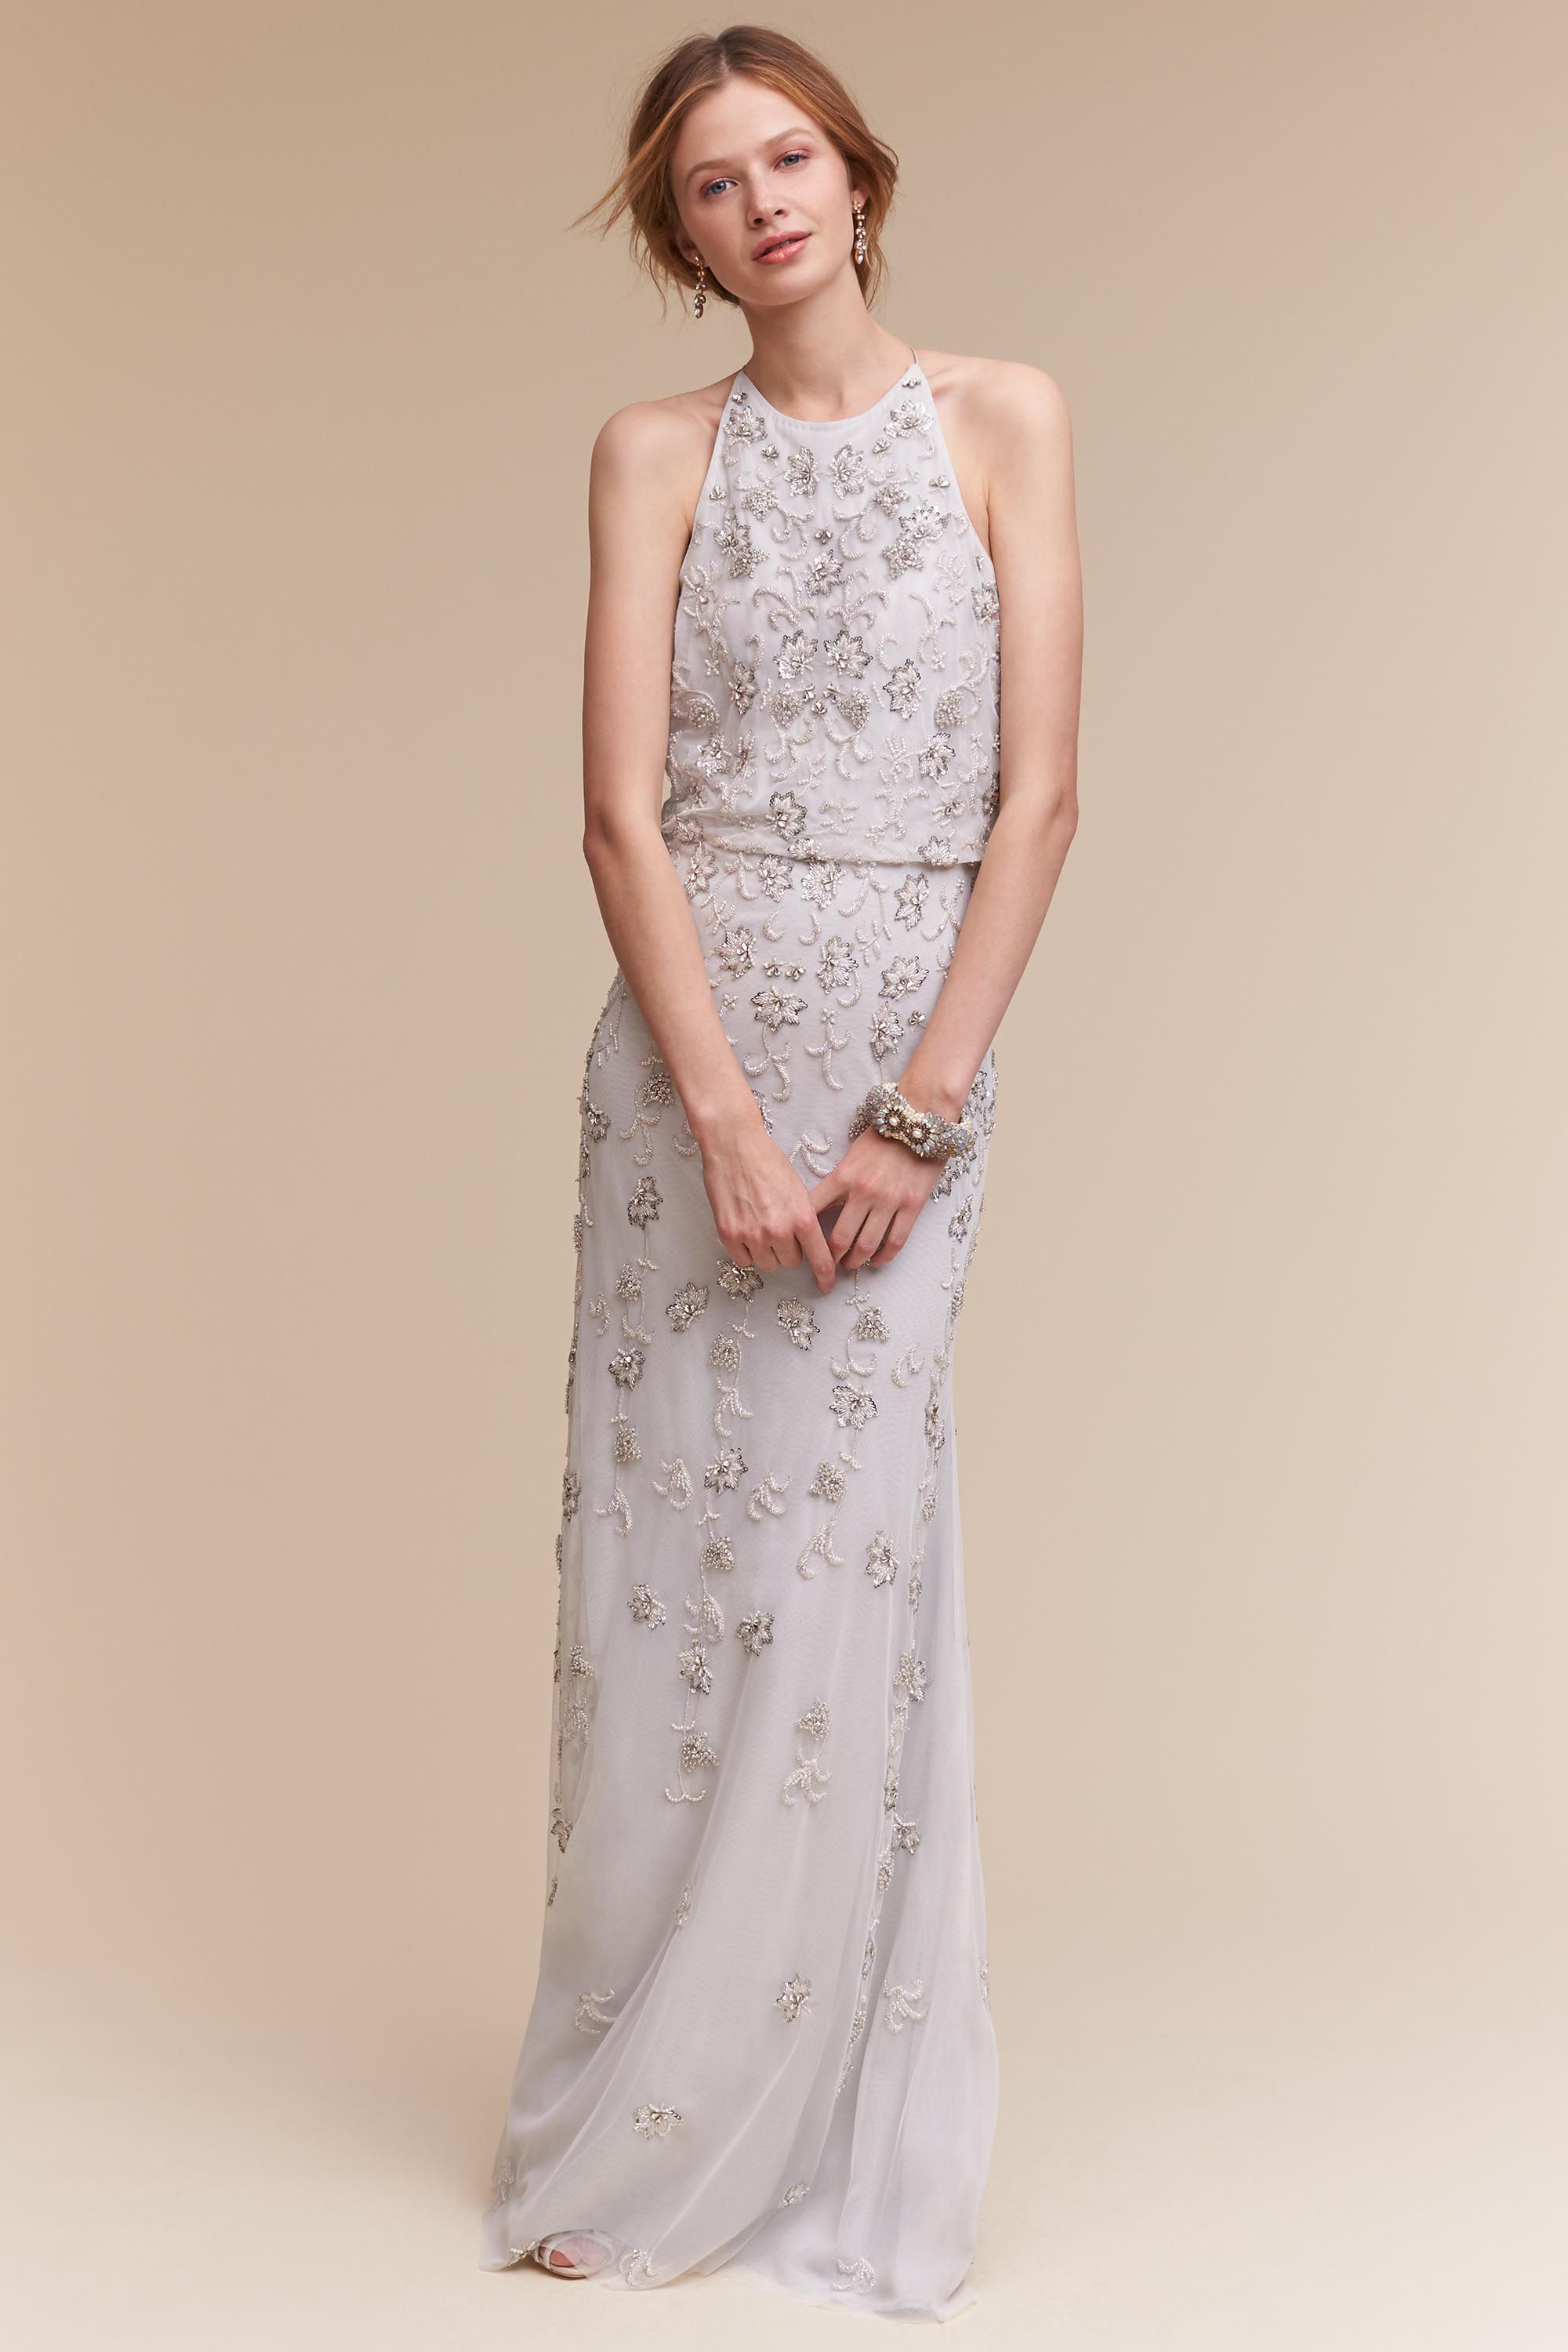 Romantic BHLDN Wedding Dresses - Starling Gown